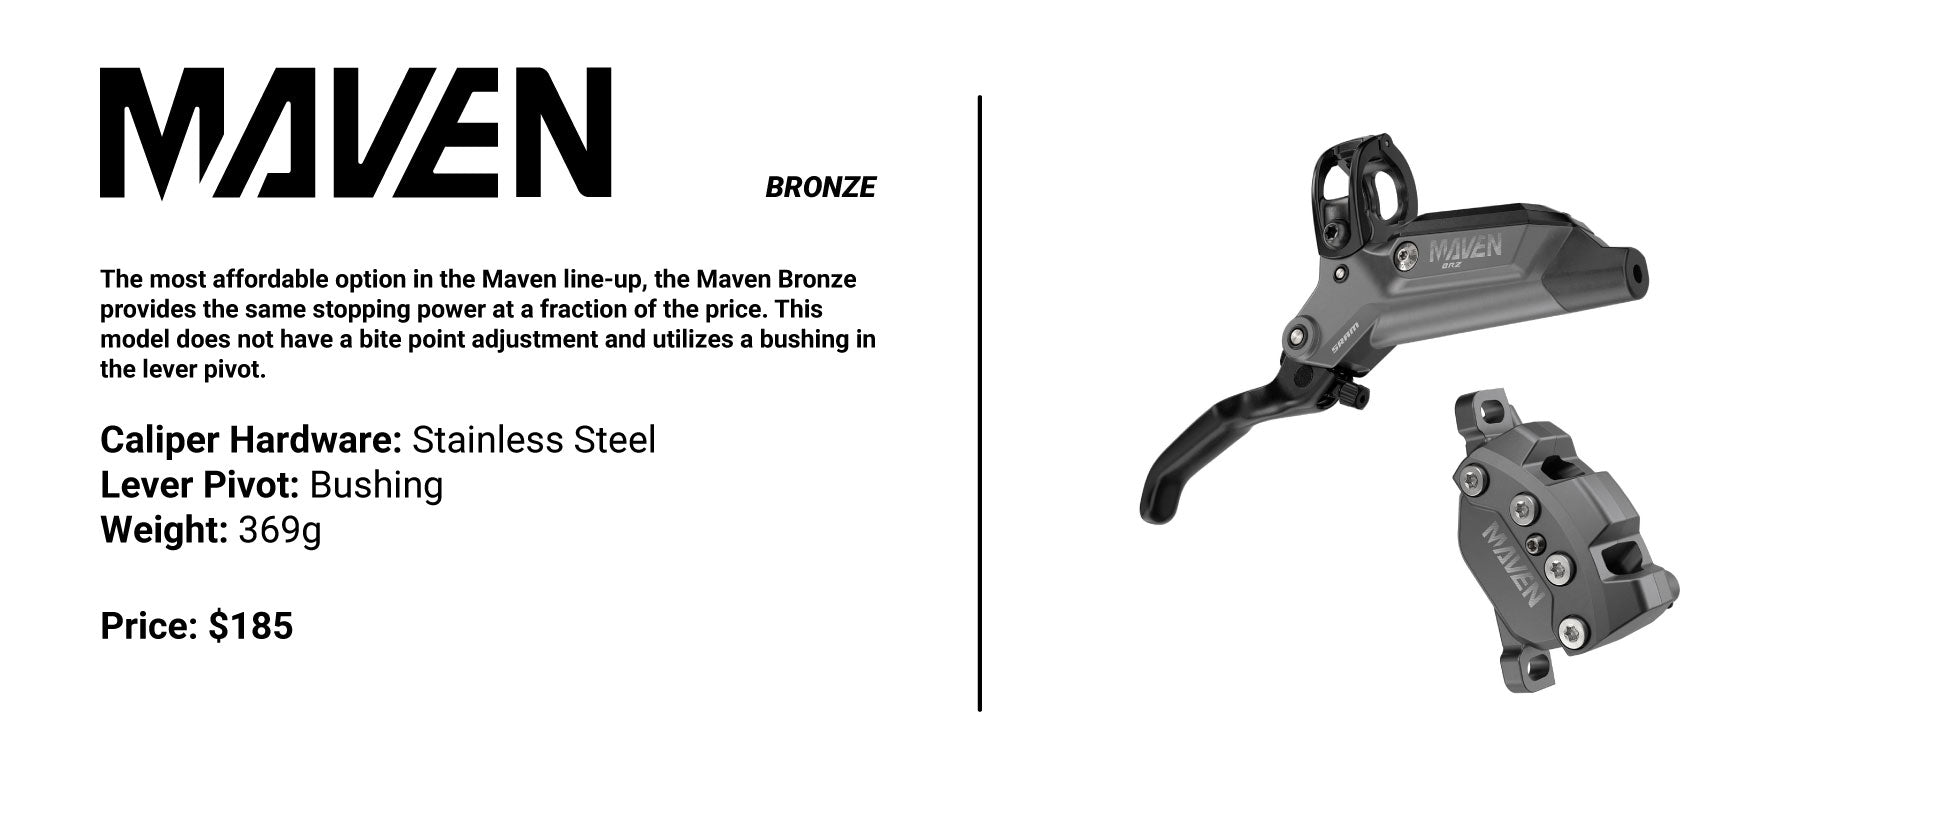 SRAM Maven Bronze Brakes for Sale